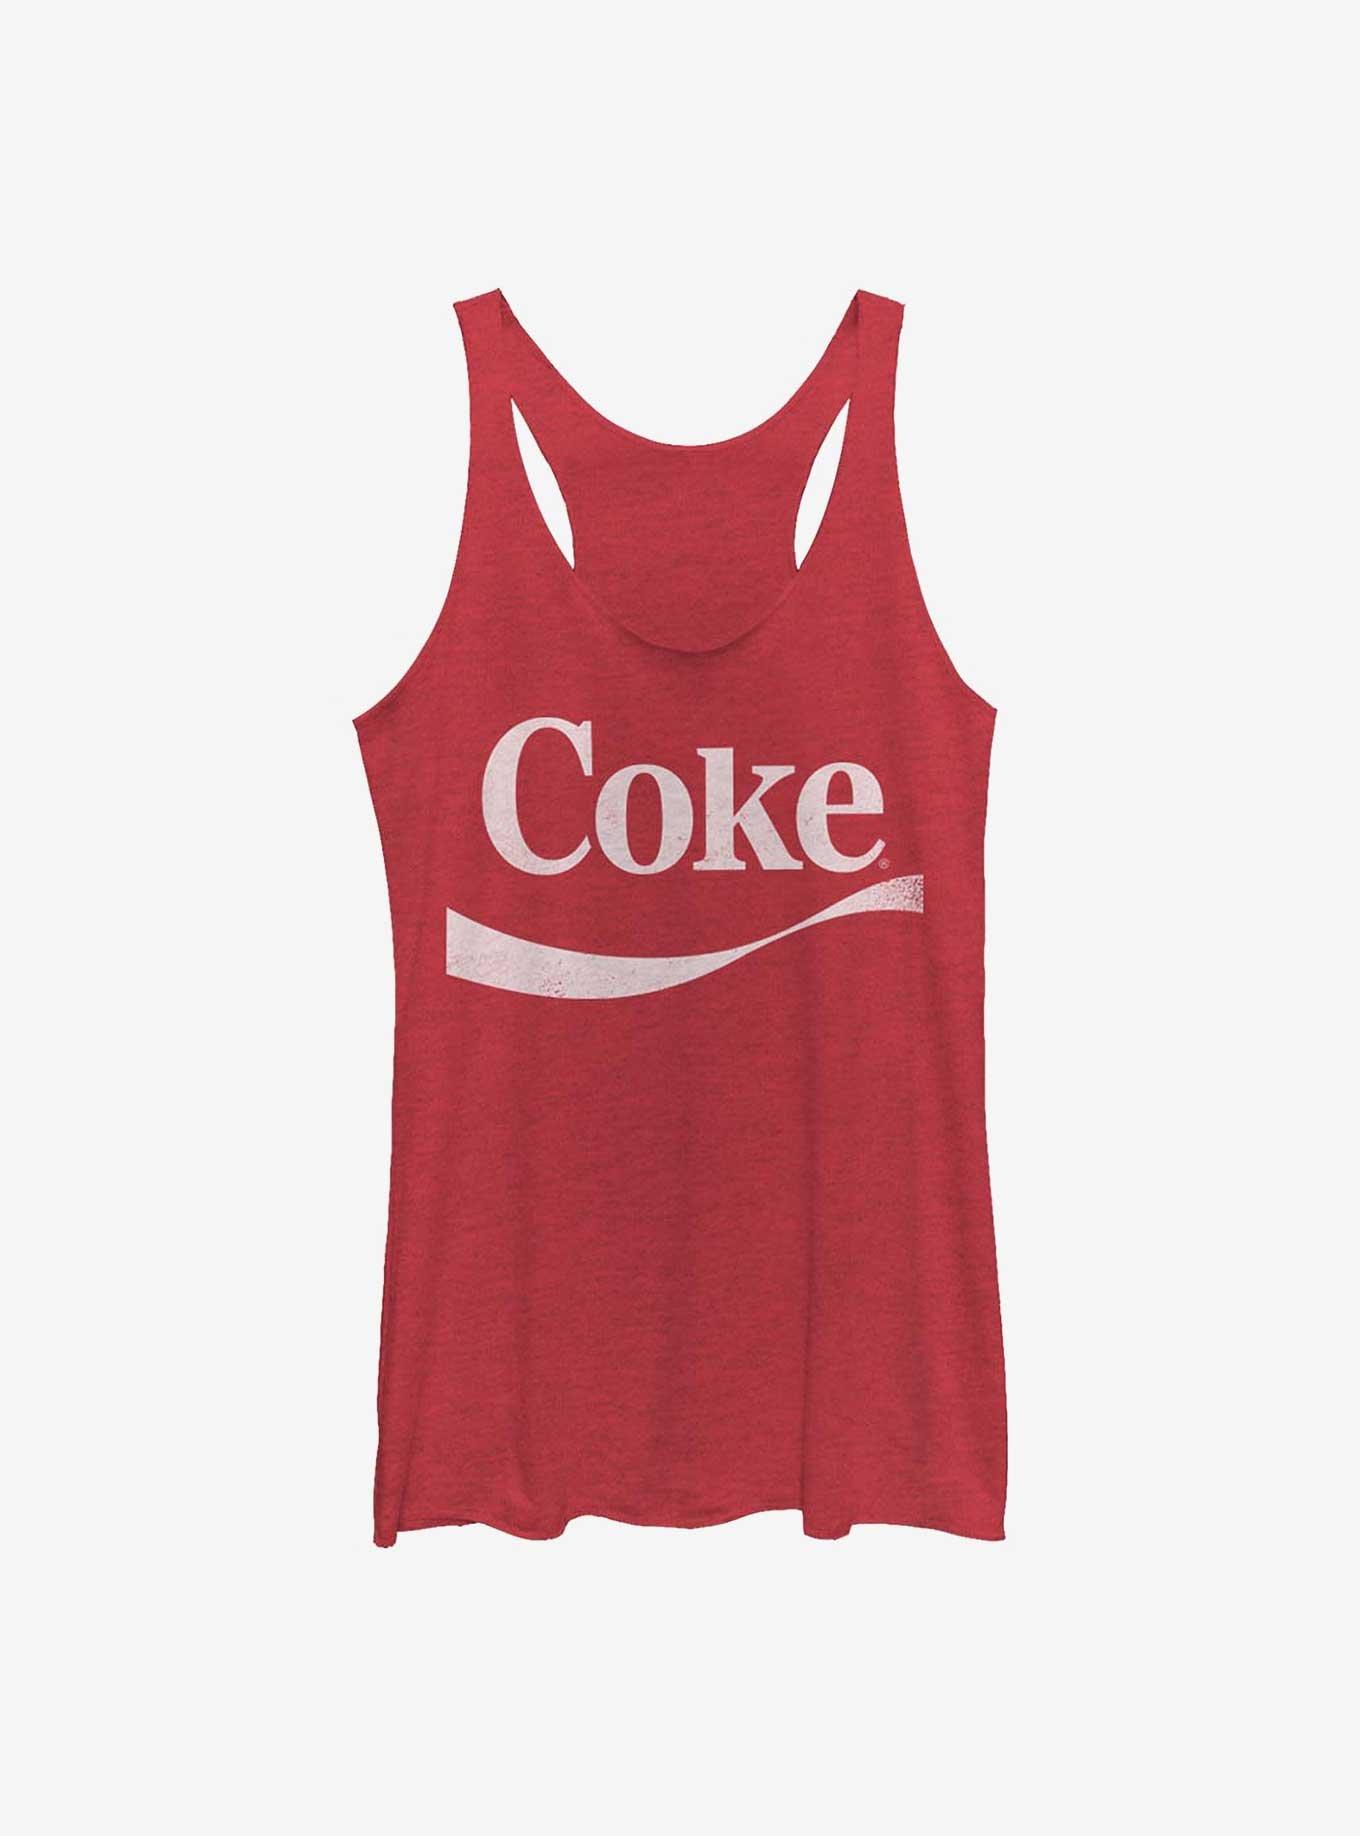 Coca-Cola Simple Coke Swoosh Girls Raw Edge Tank, RED HTR, hi-res